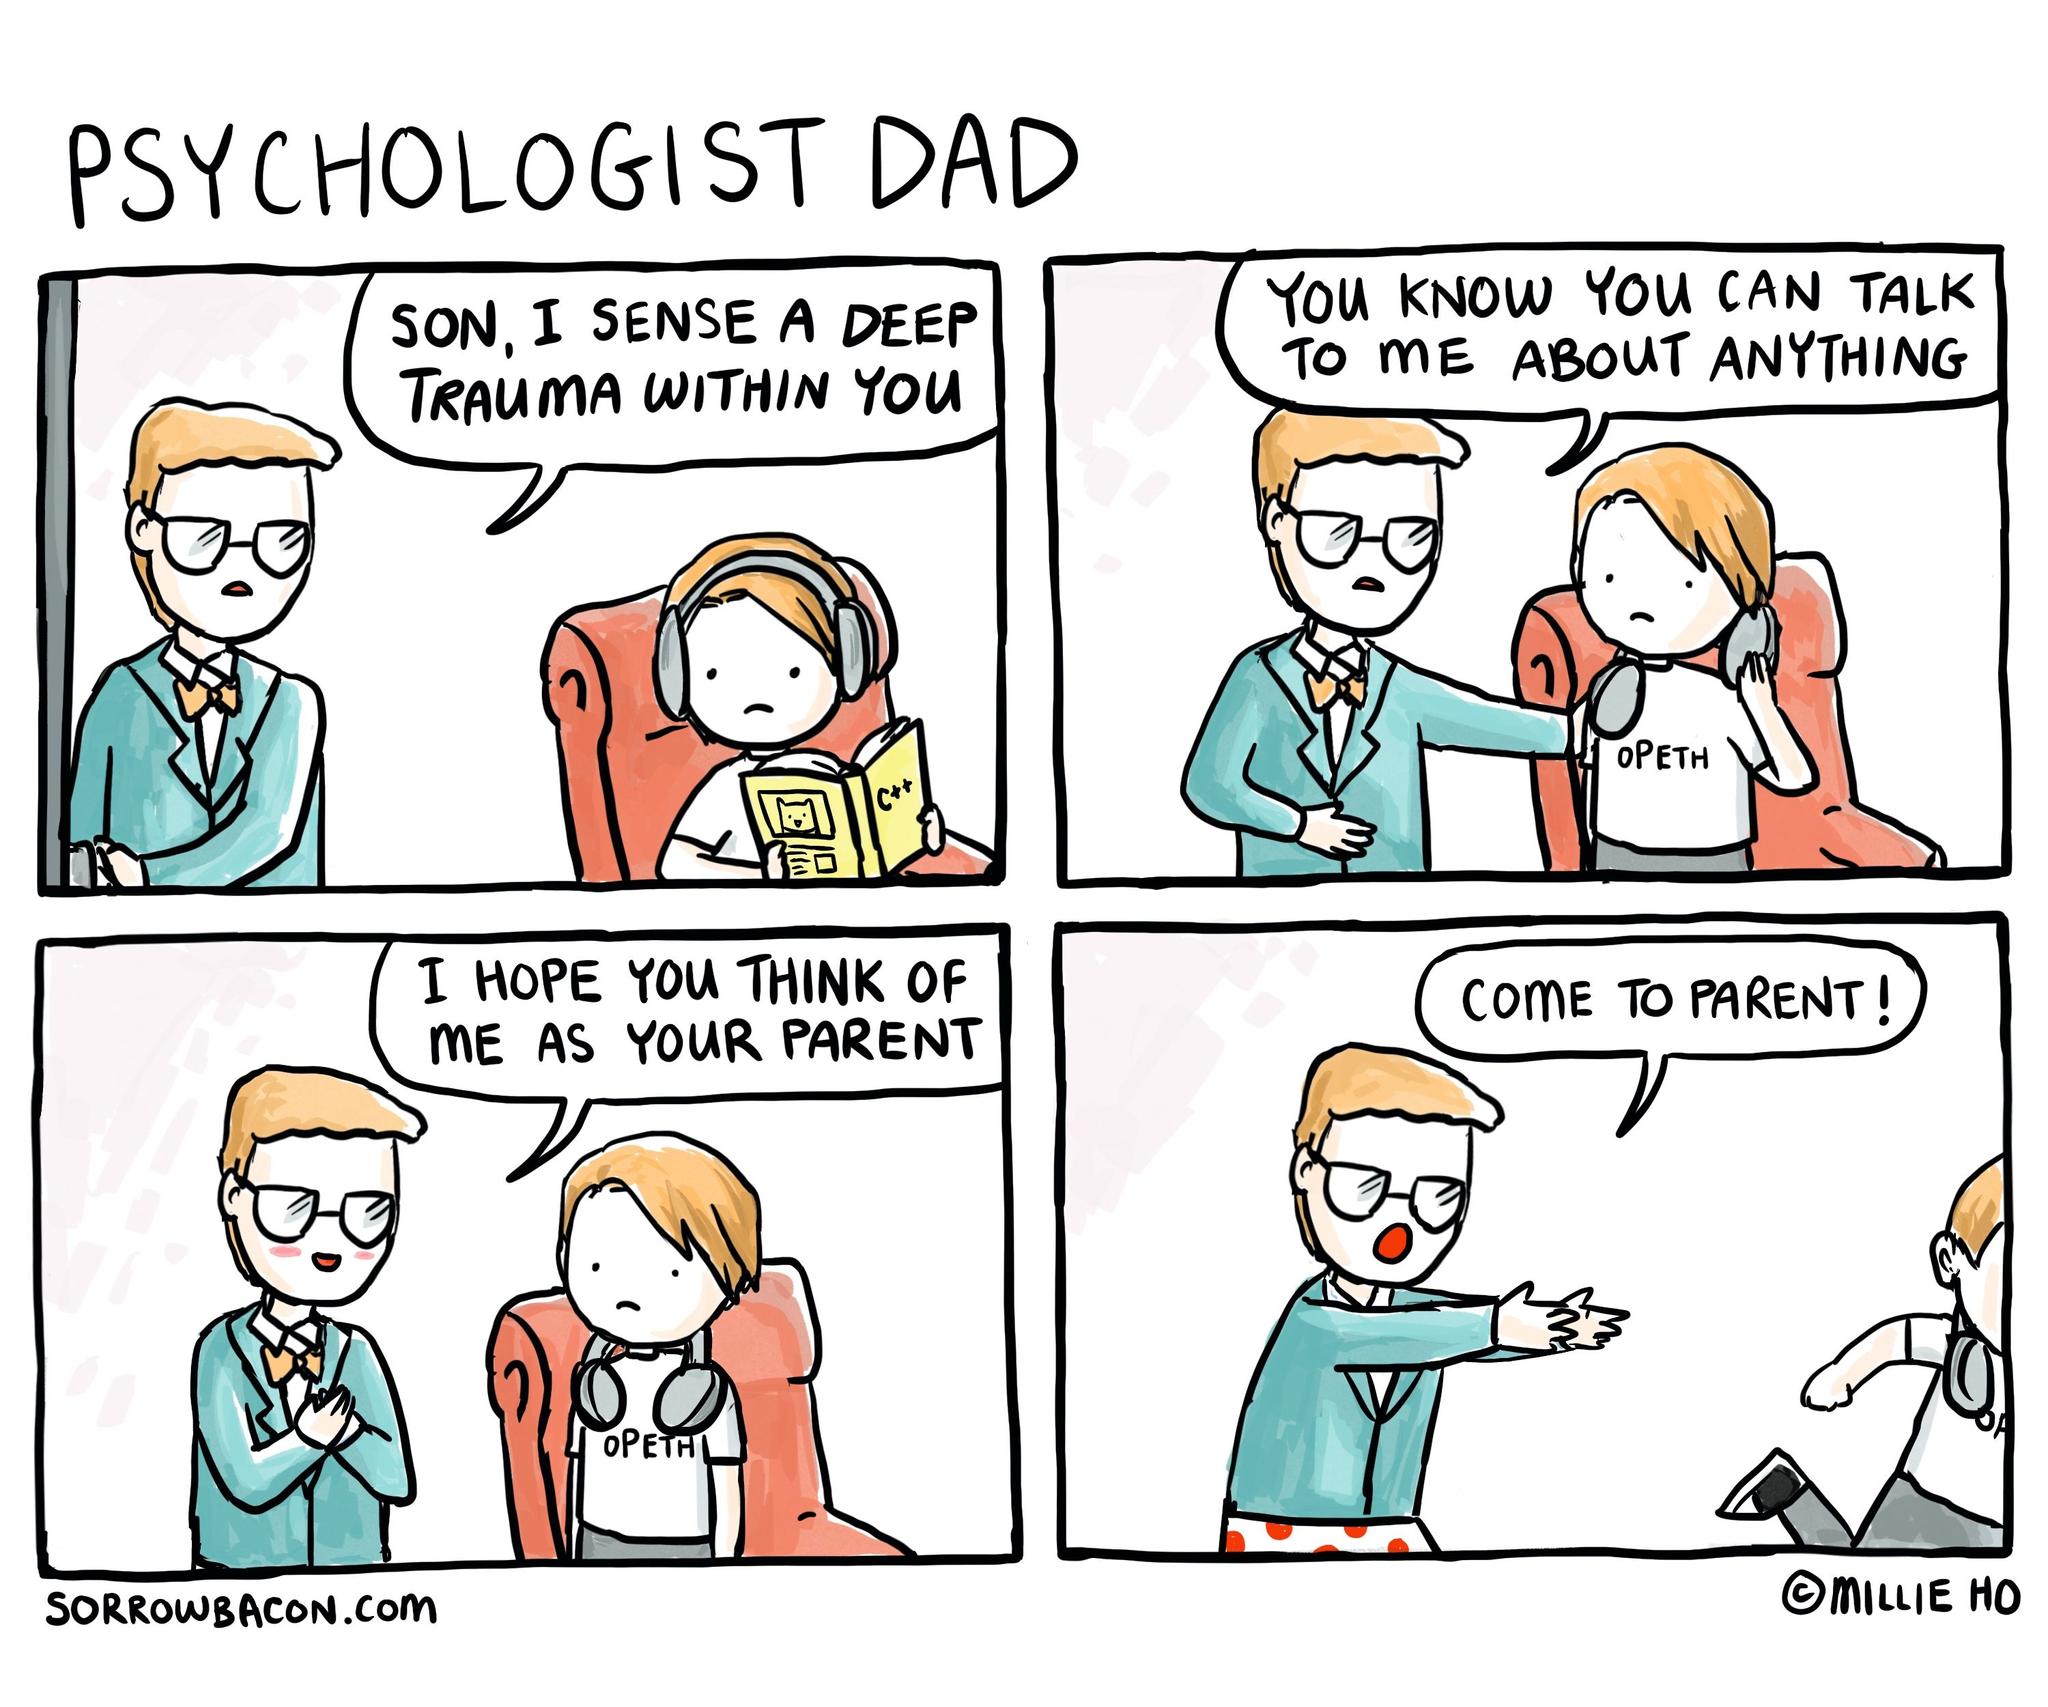 Psychologist Dad sorrowbacon comic